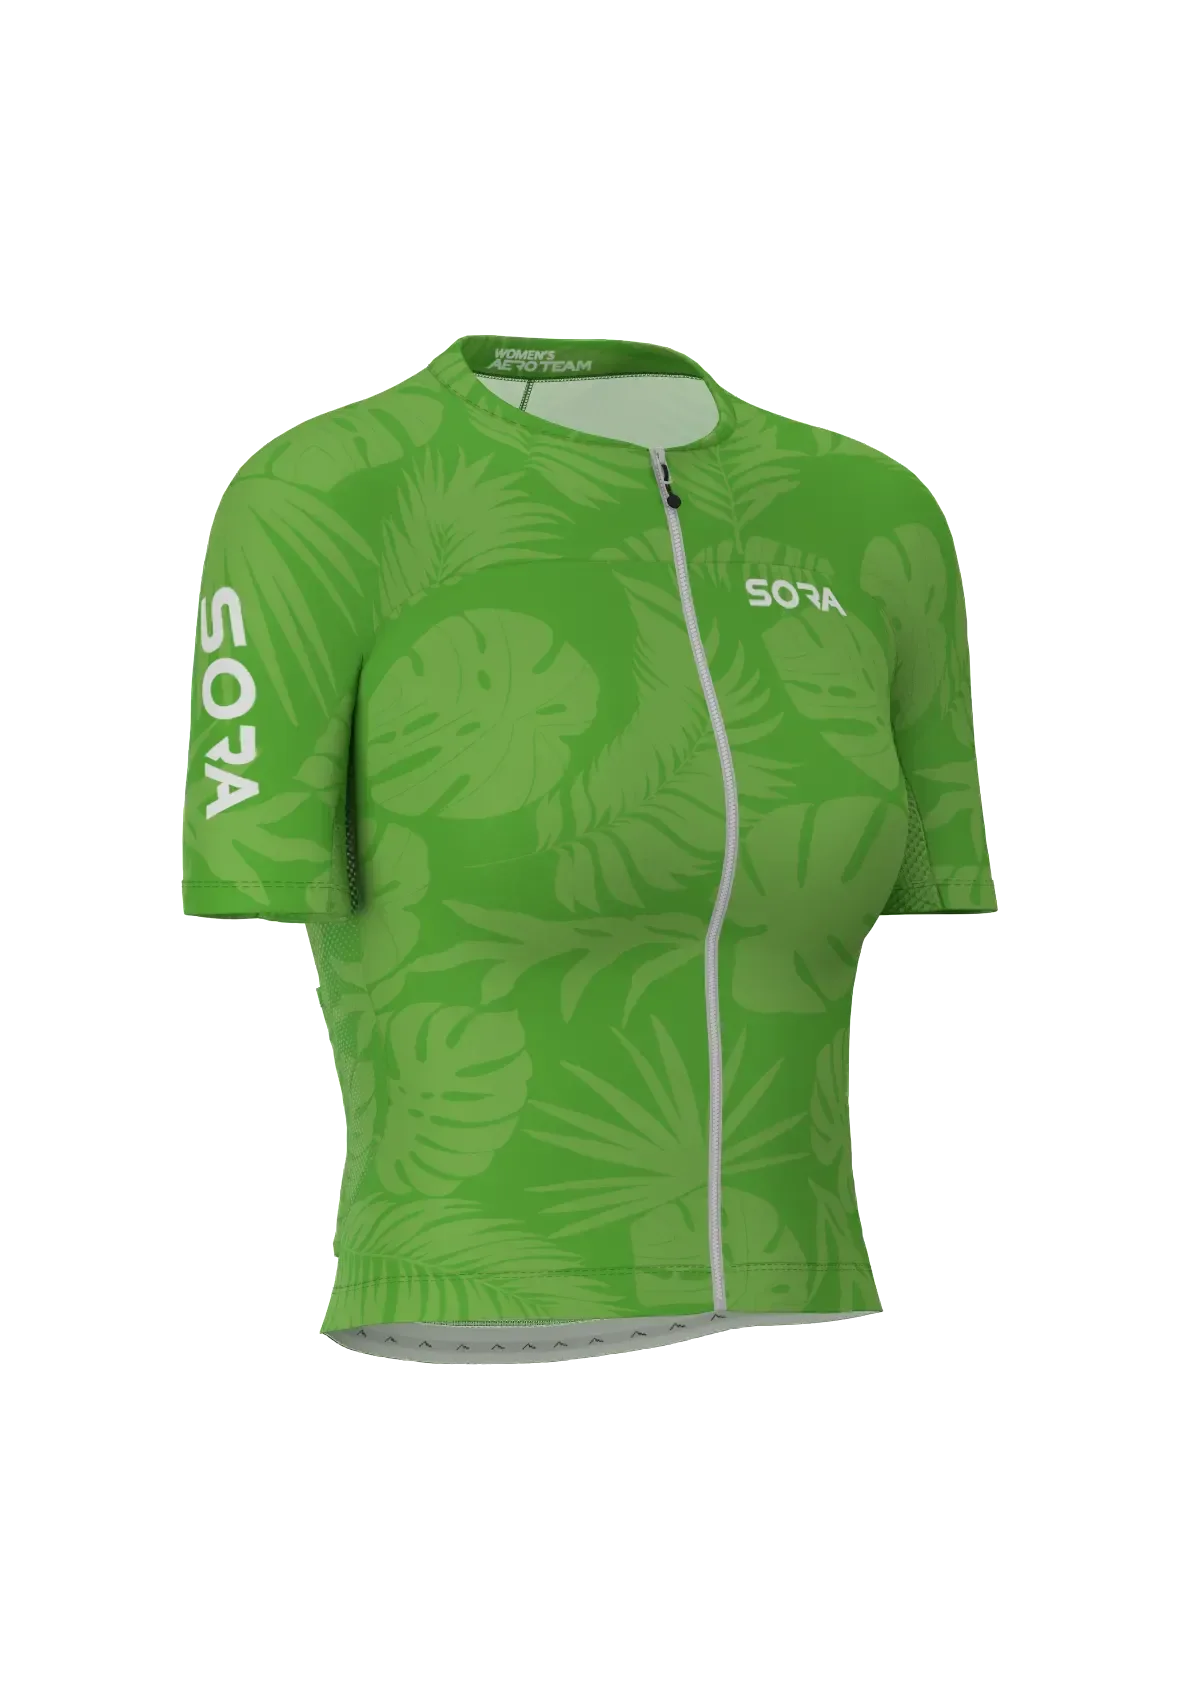 Aero Team women's cycling jersey green